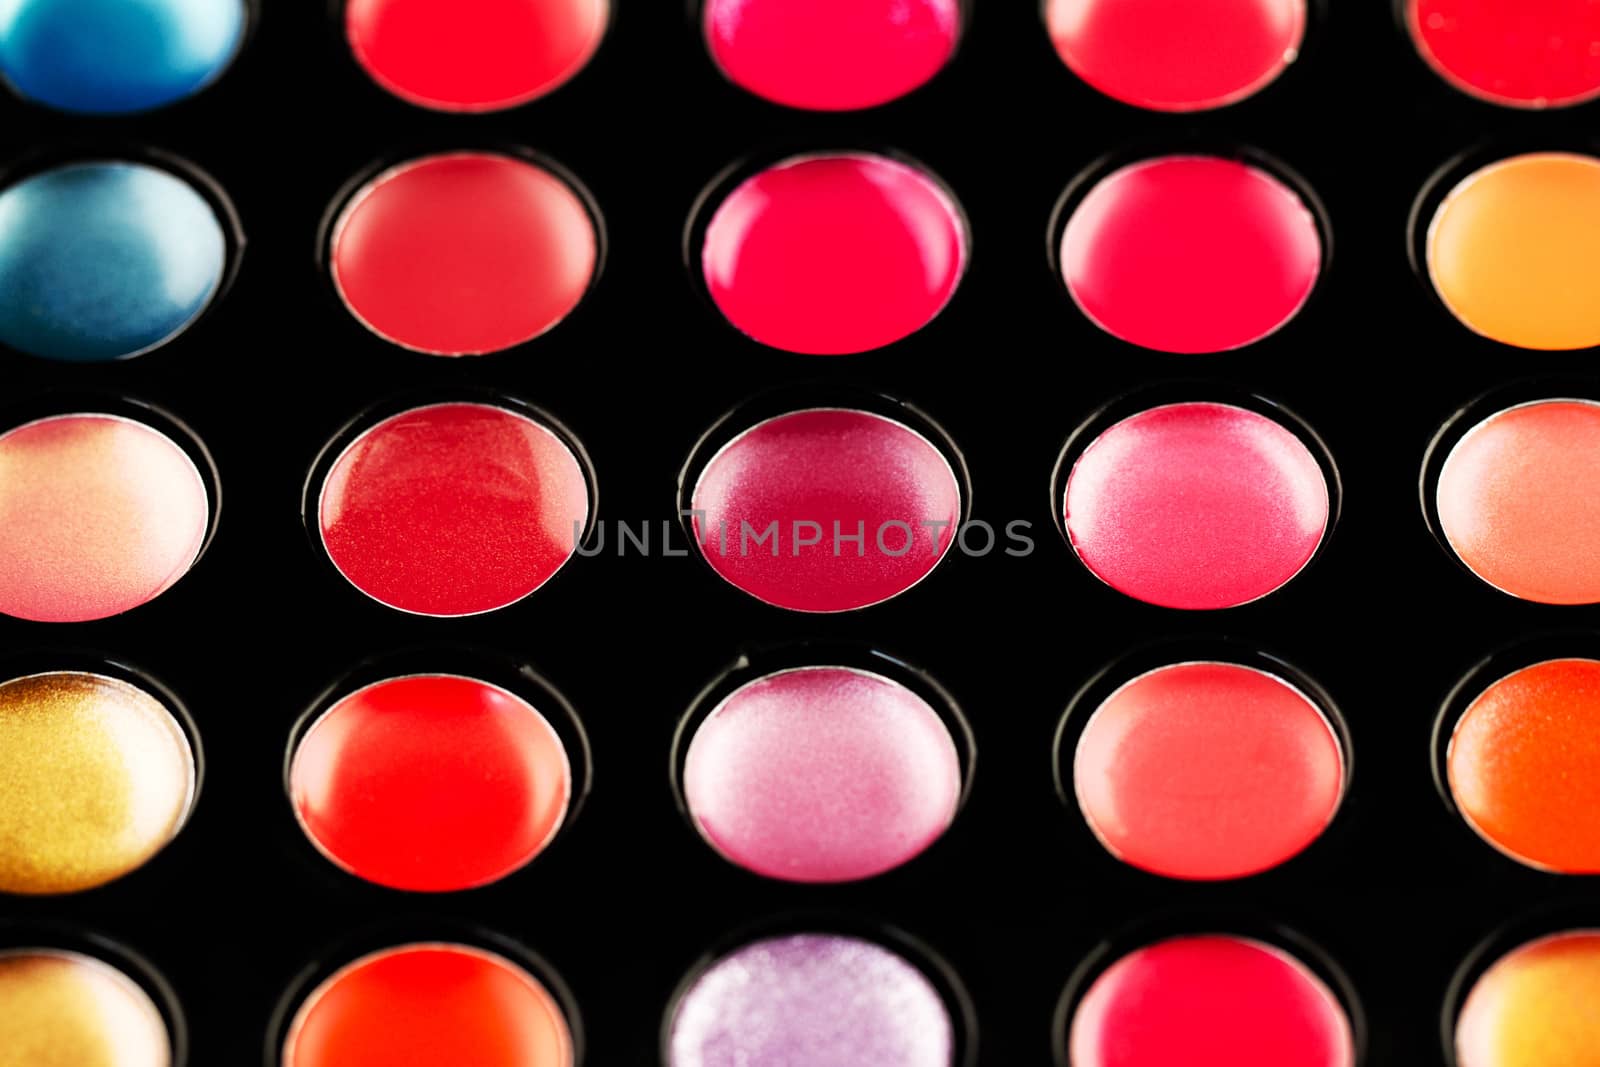 Lip gloss palette by Nneirda